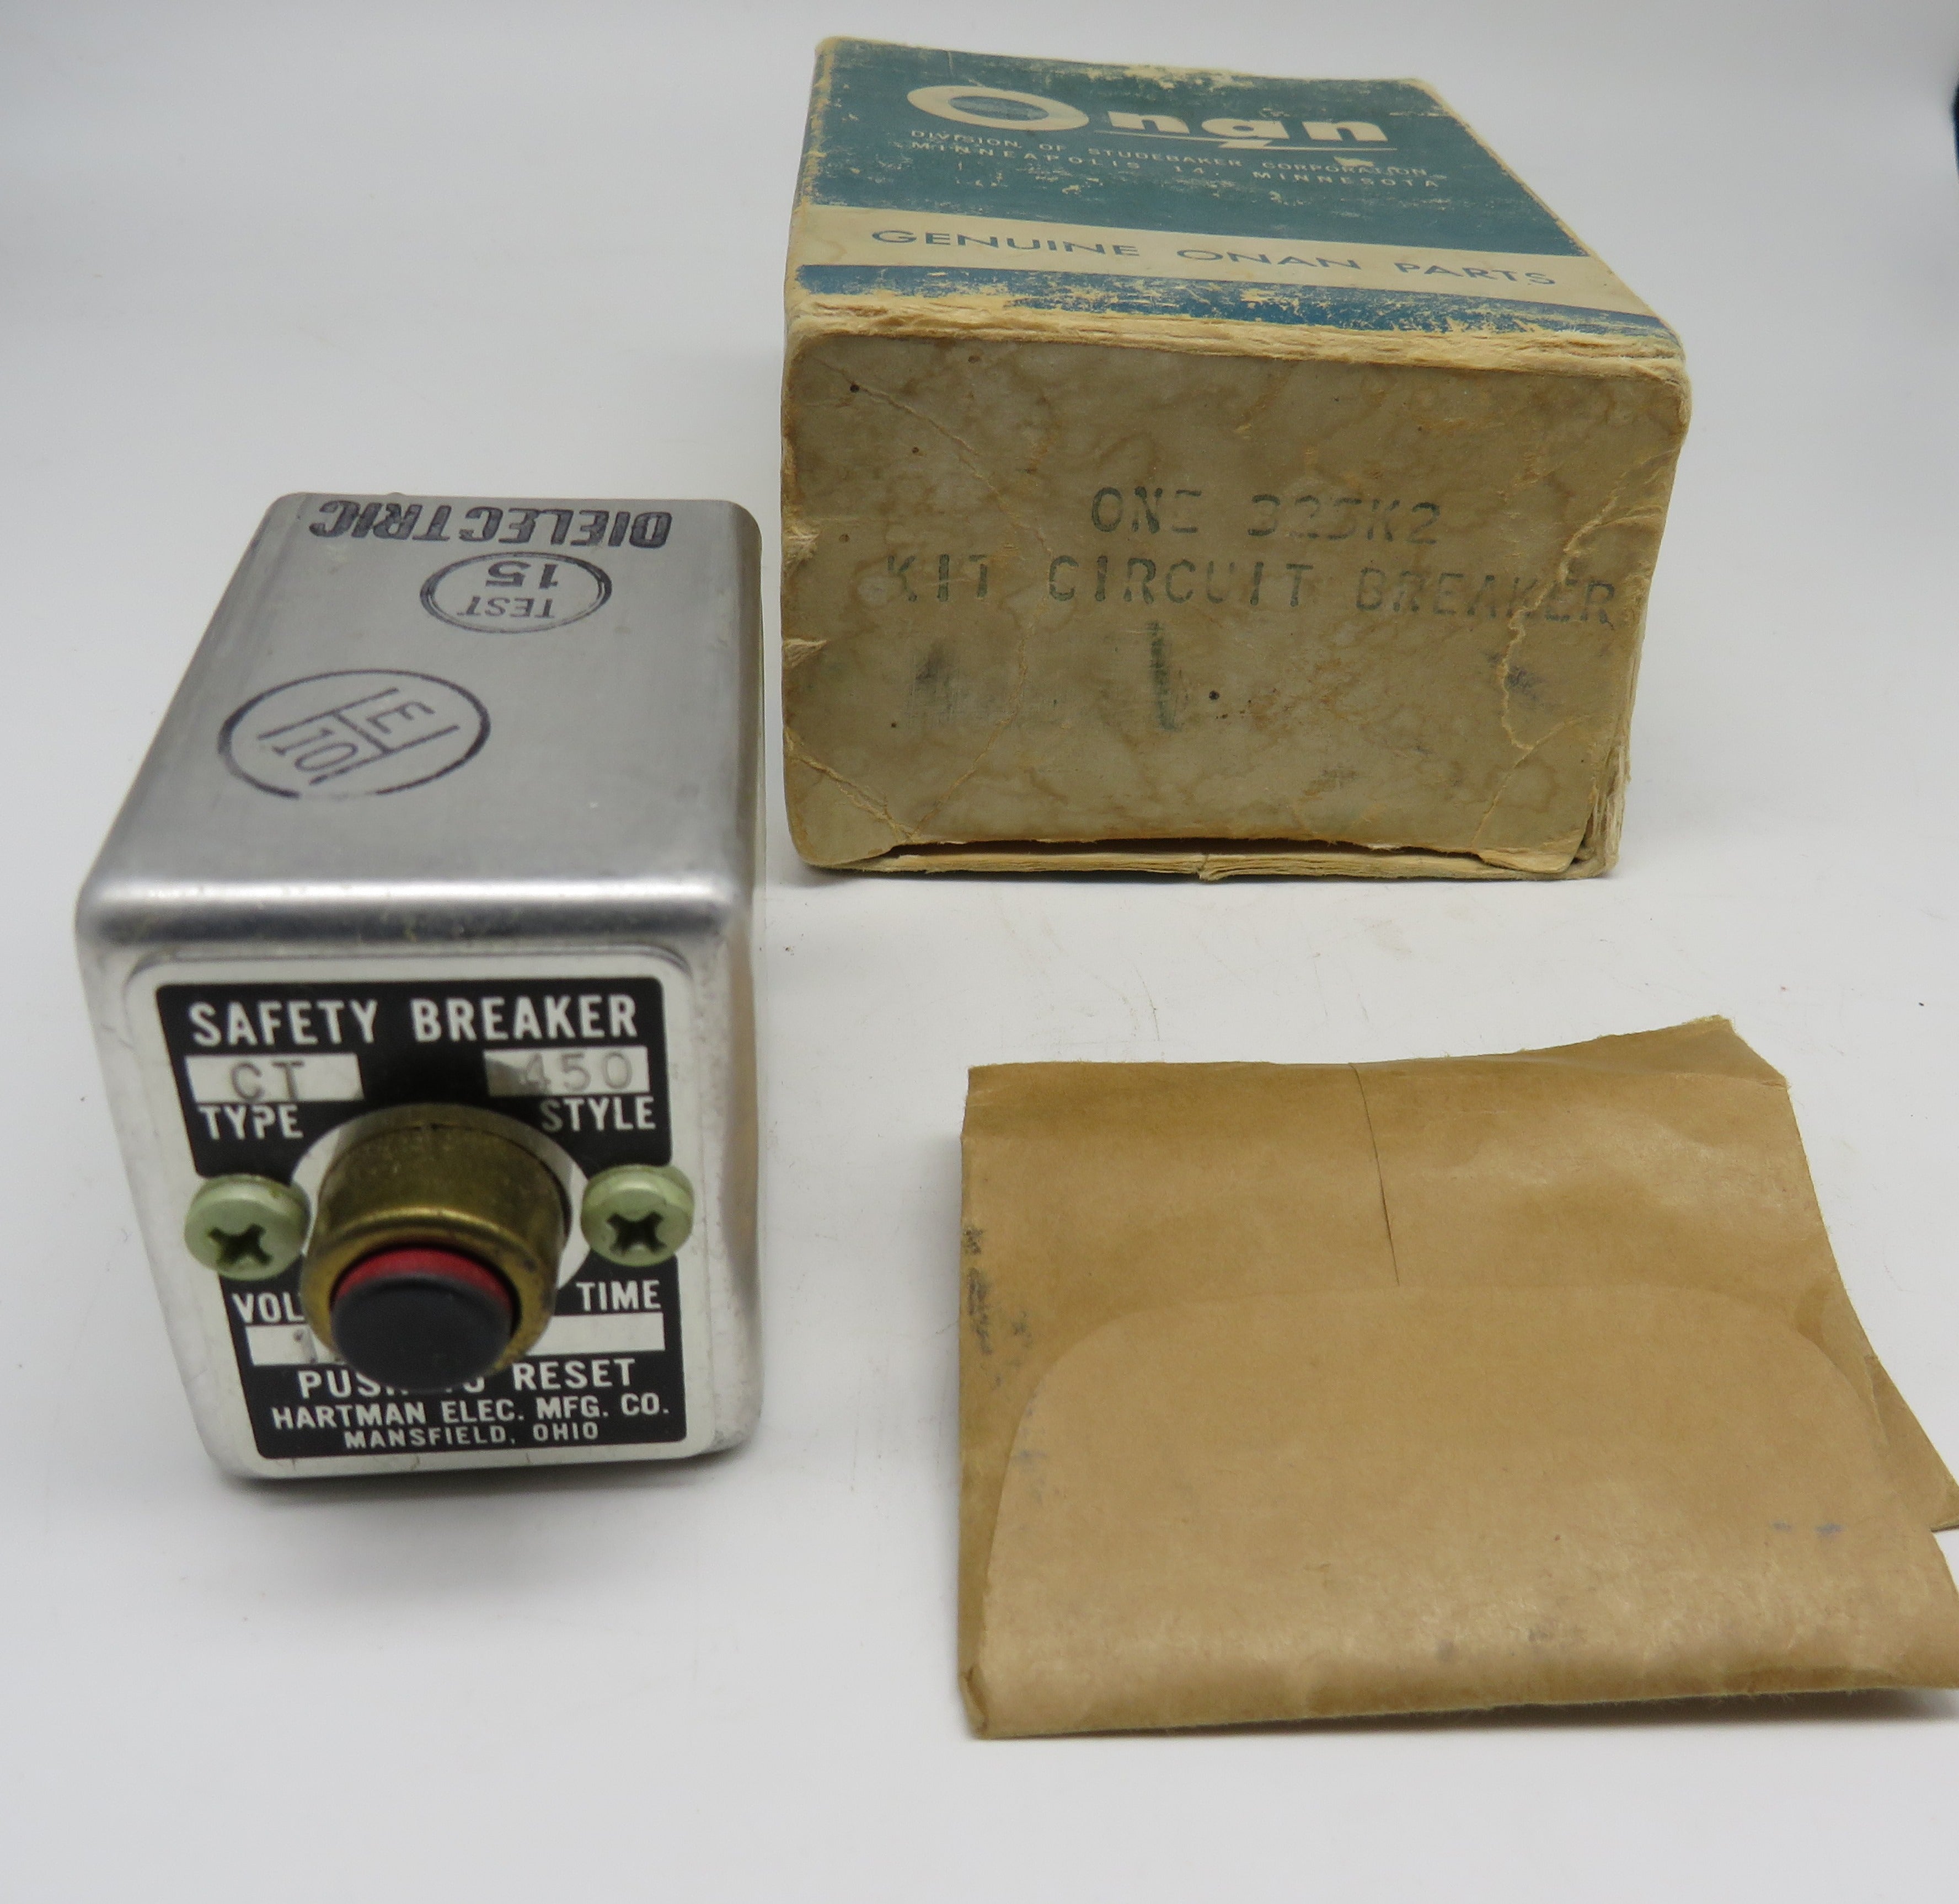 325-0002 Onan Circuit Breaker Kit Obsolete (Sept 1963) 